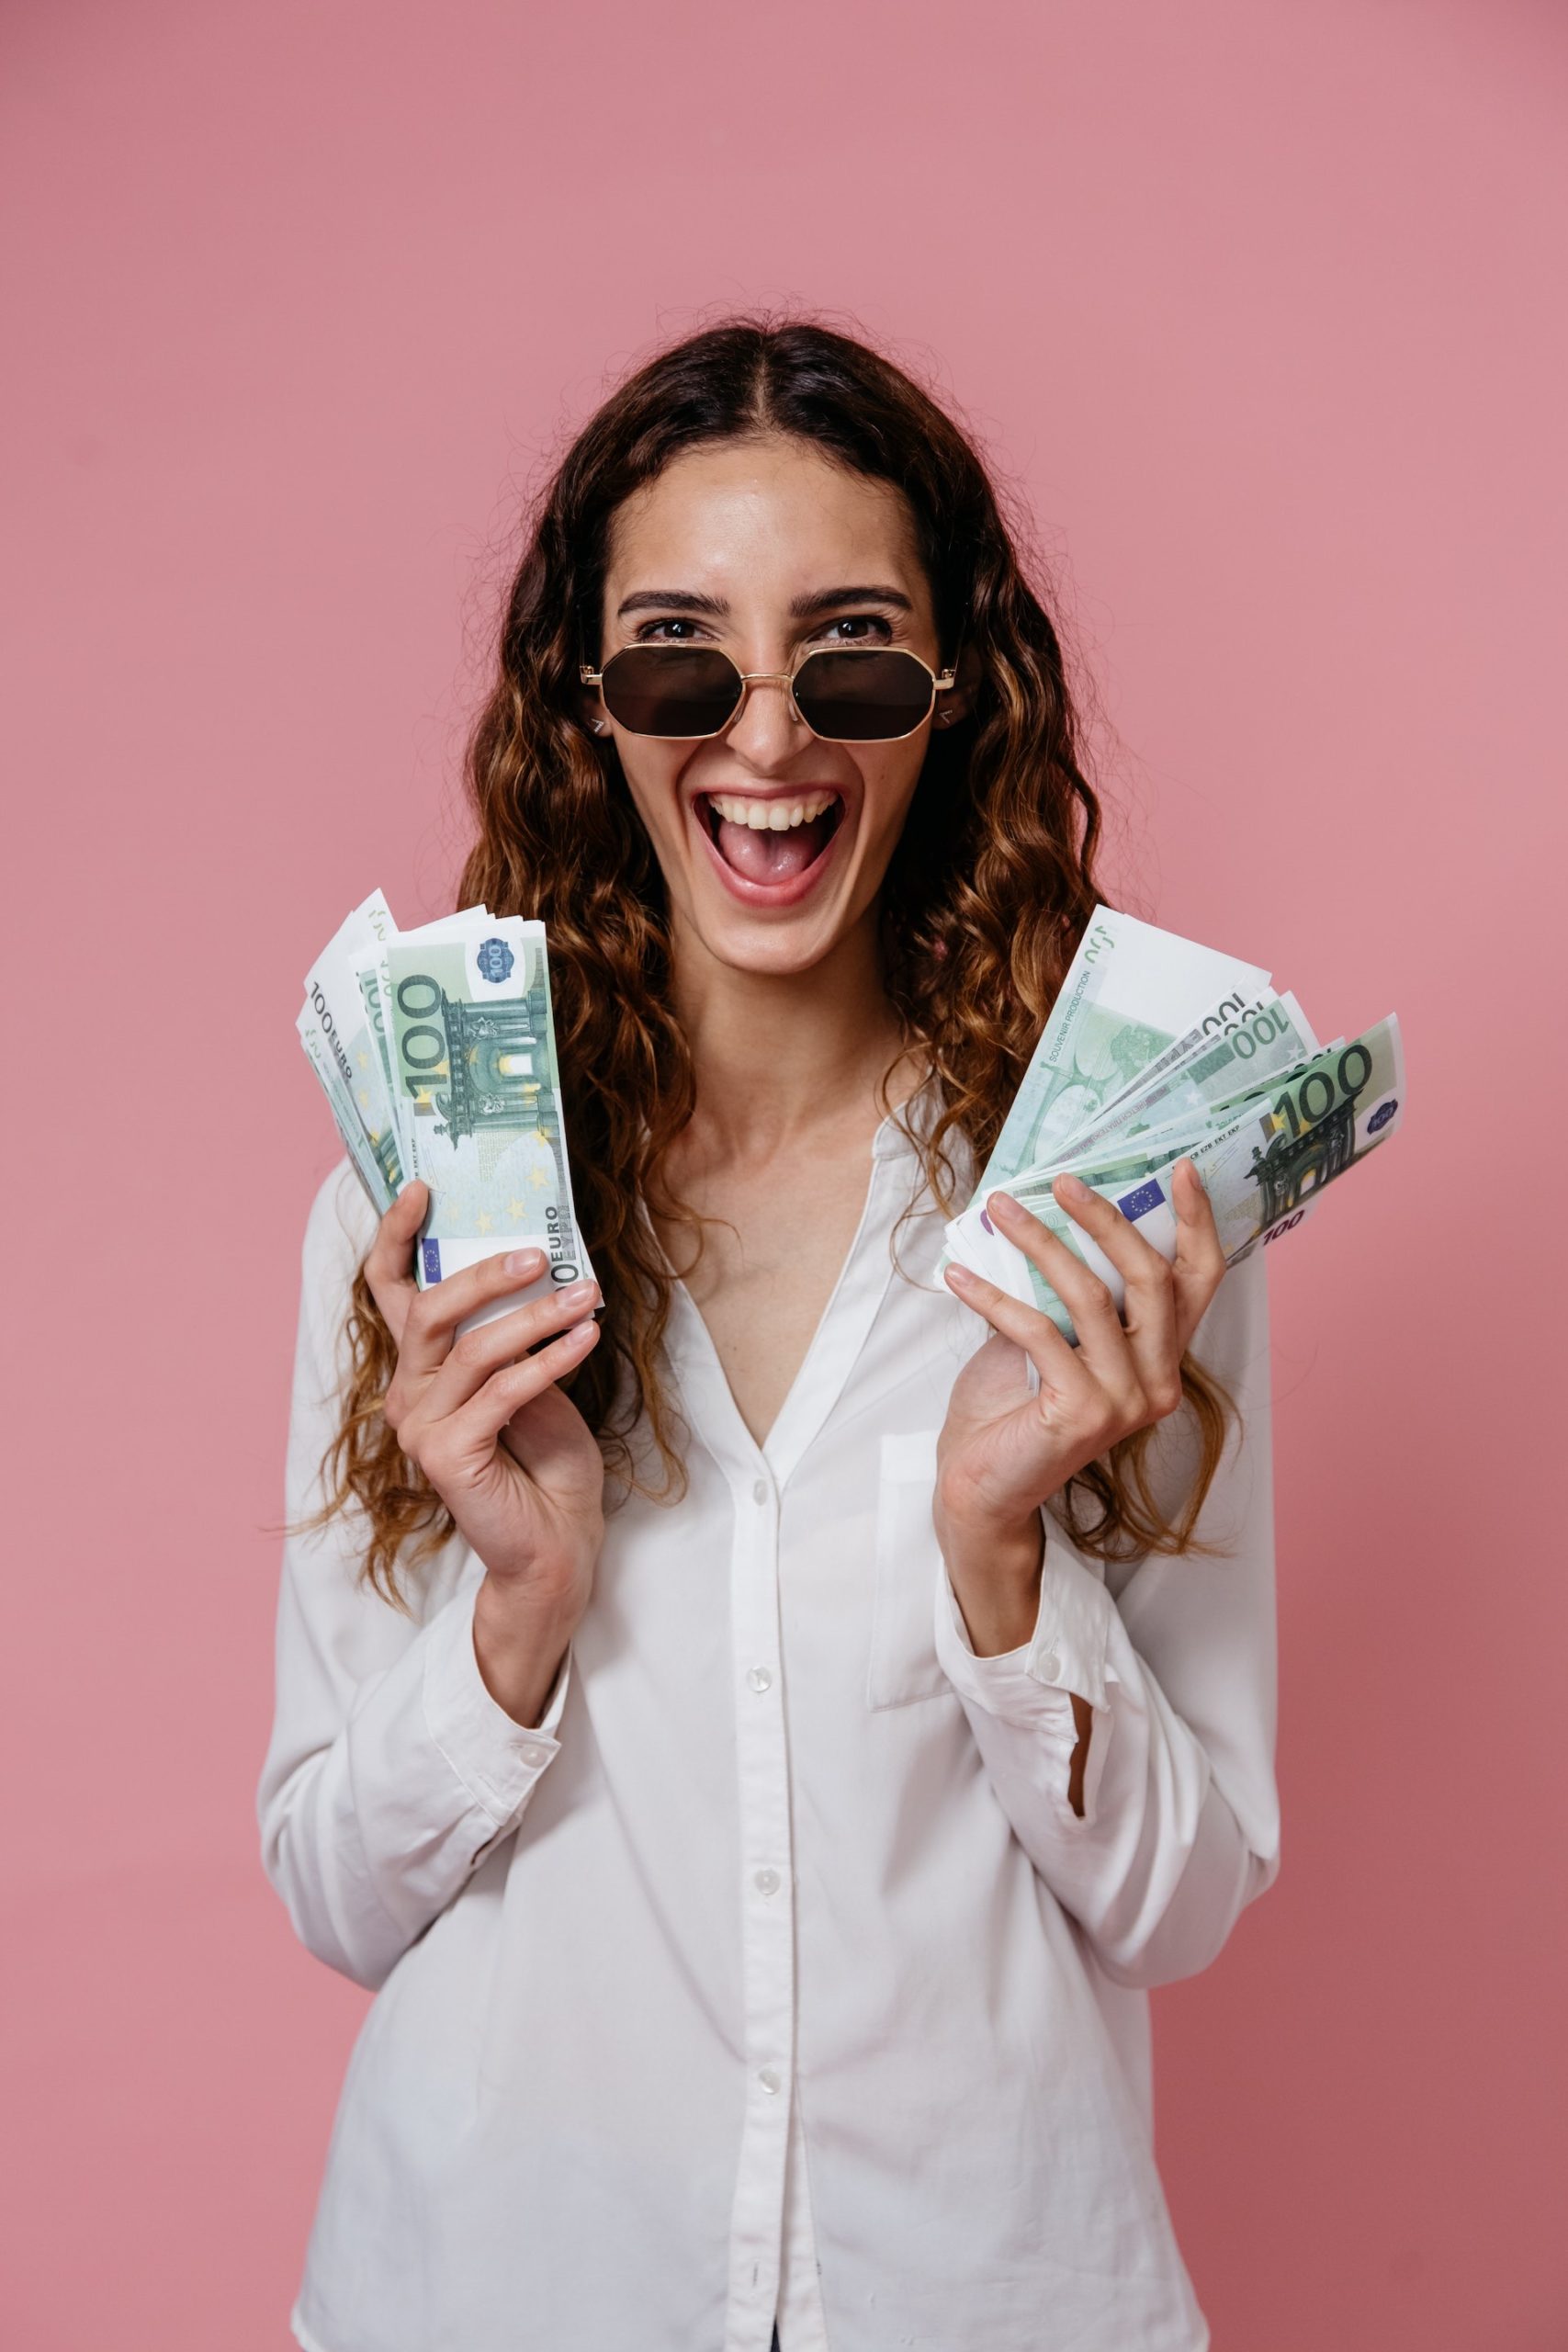 10 Fun Ways to Make Extra Cash this Summer